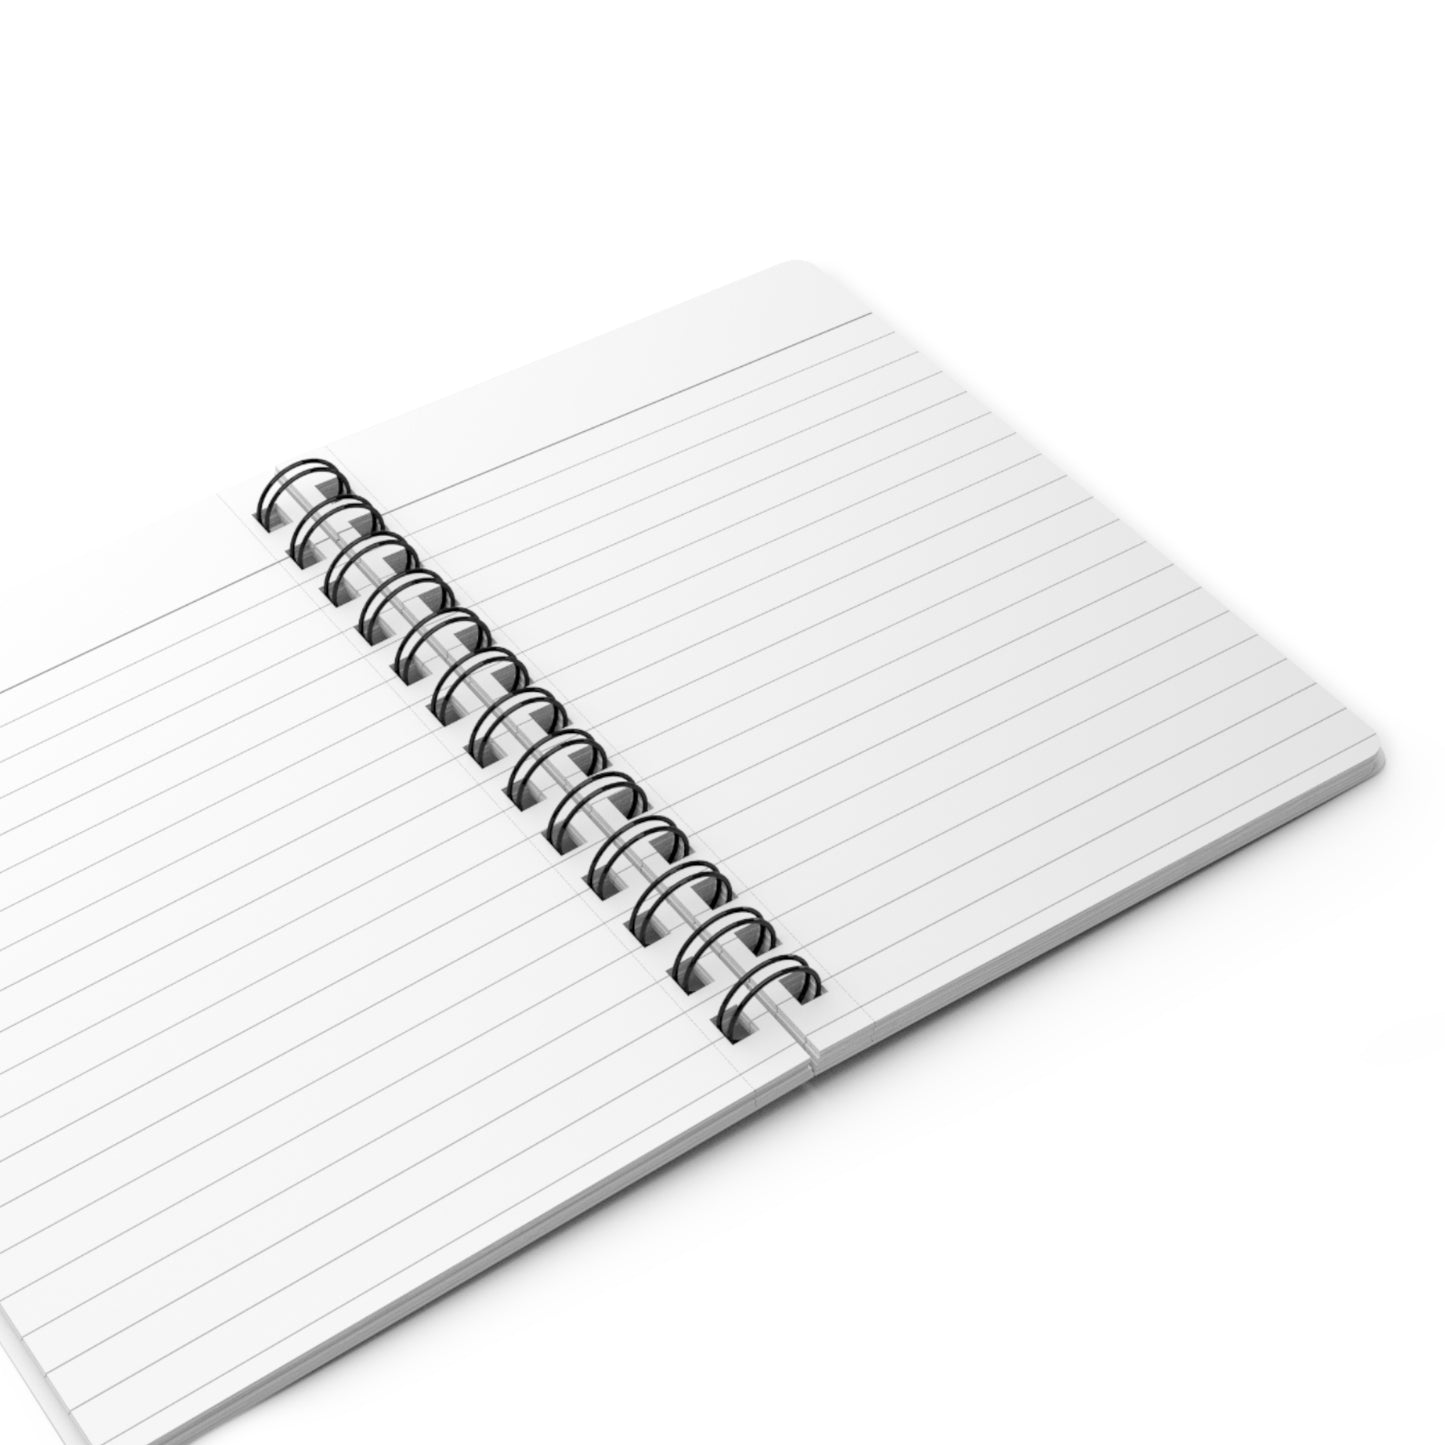 Spiral Bound Journal (Stop Thinking, Start Writing)